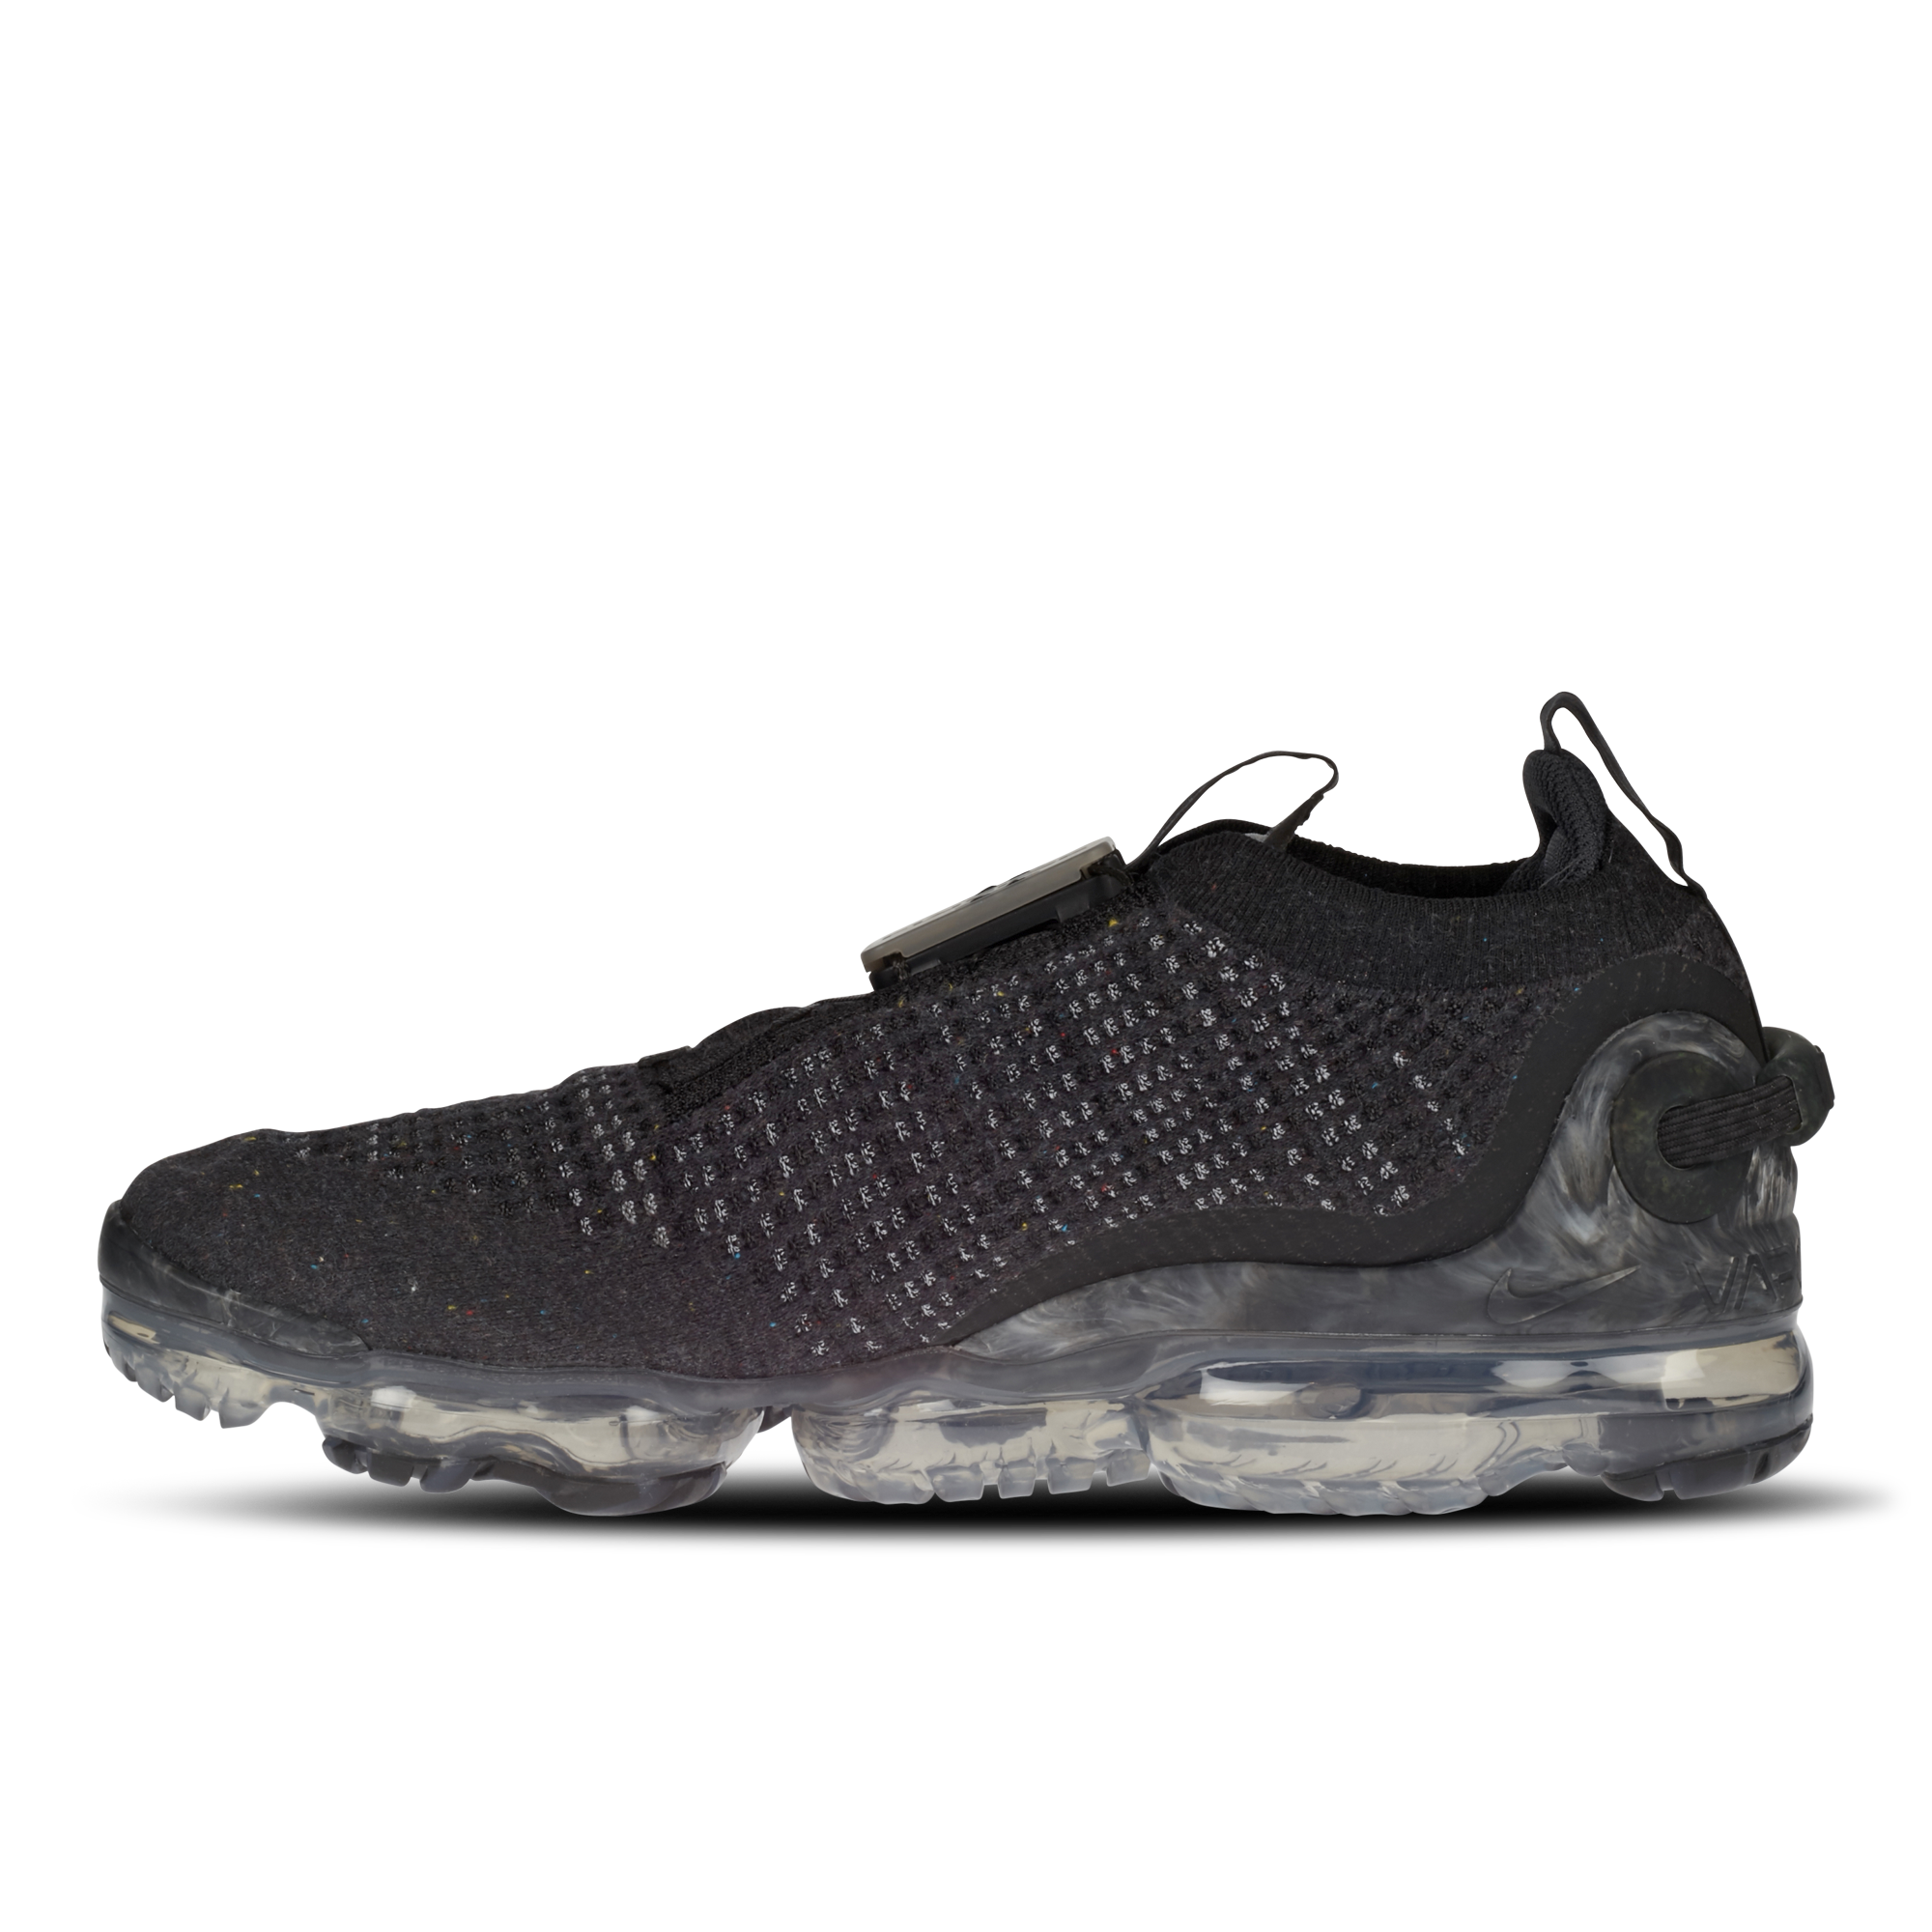 Nike Vapormax 2020 black gray release info 4 SneakersBR